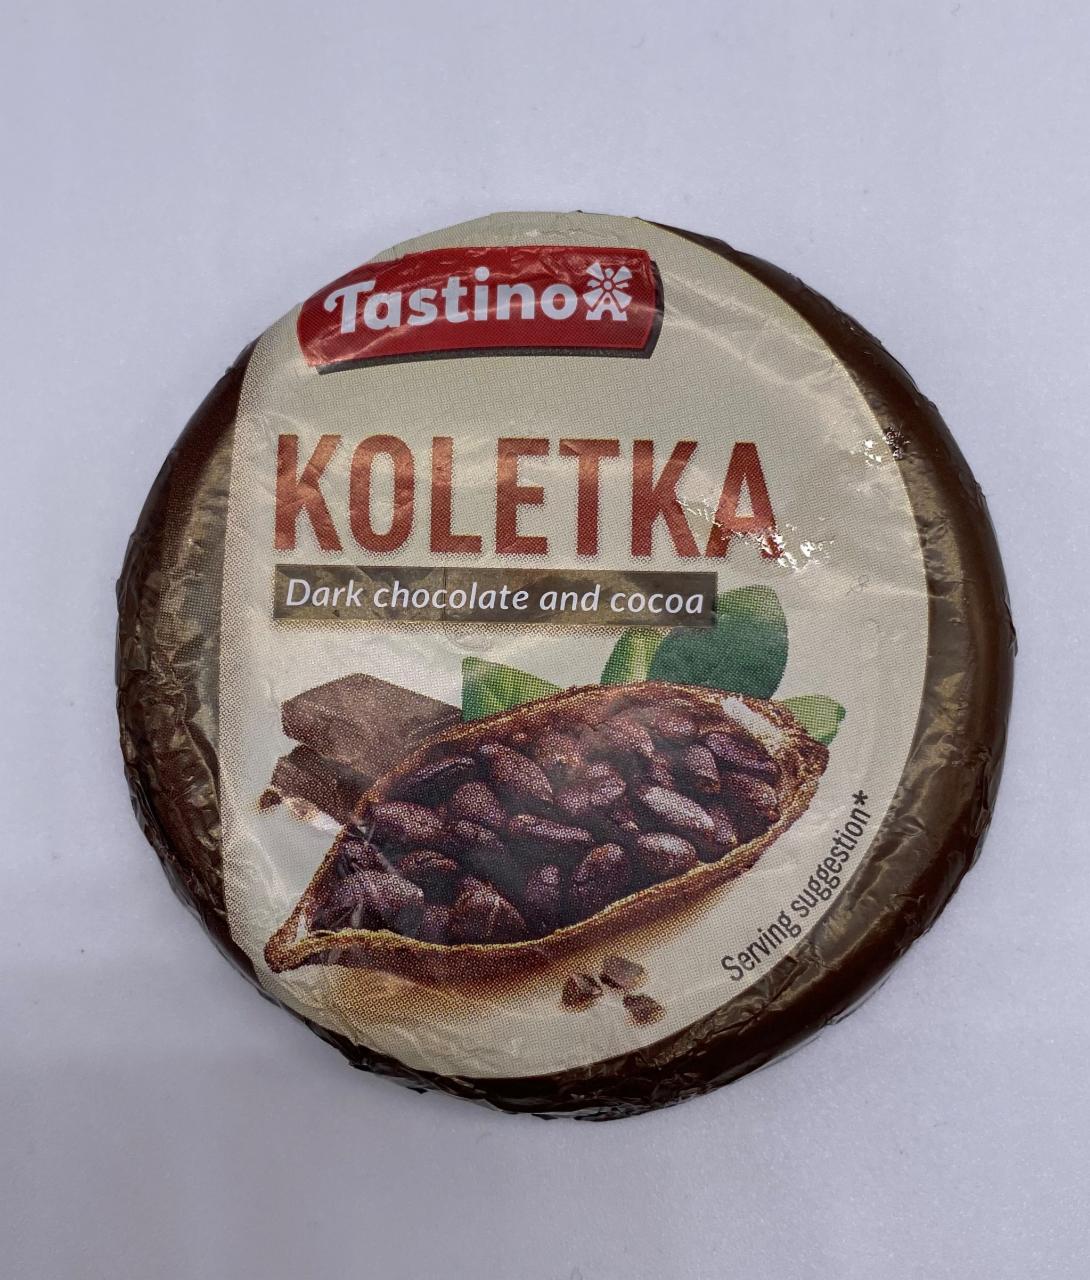 Fotografie - Koletka Dark chocolate and cocoa Tastino